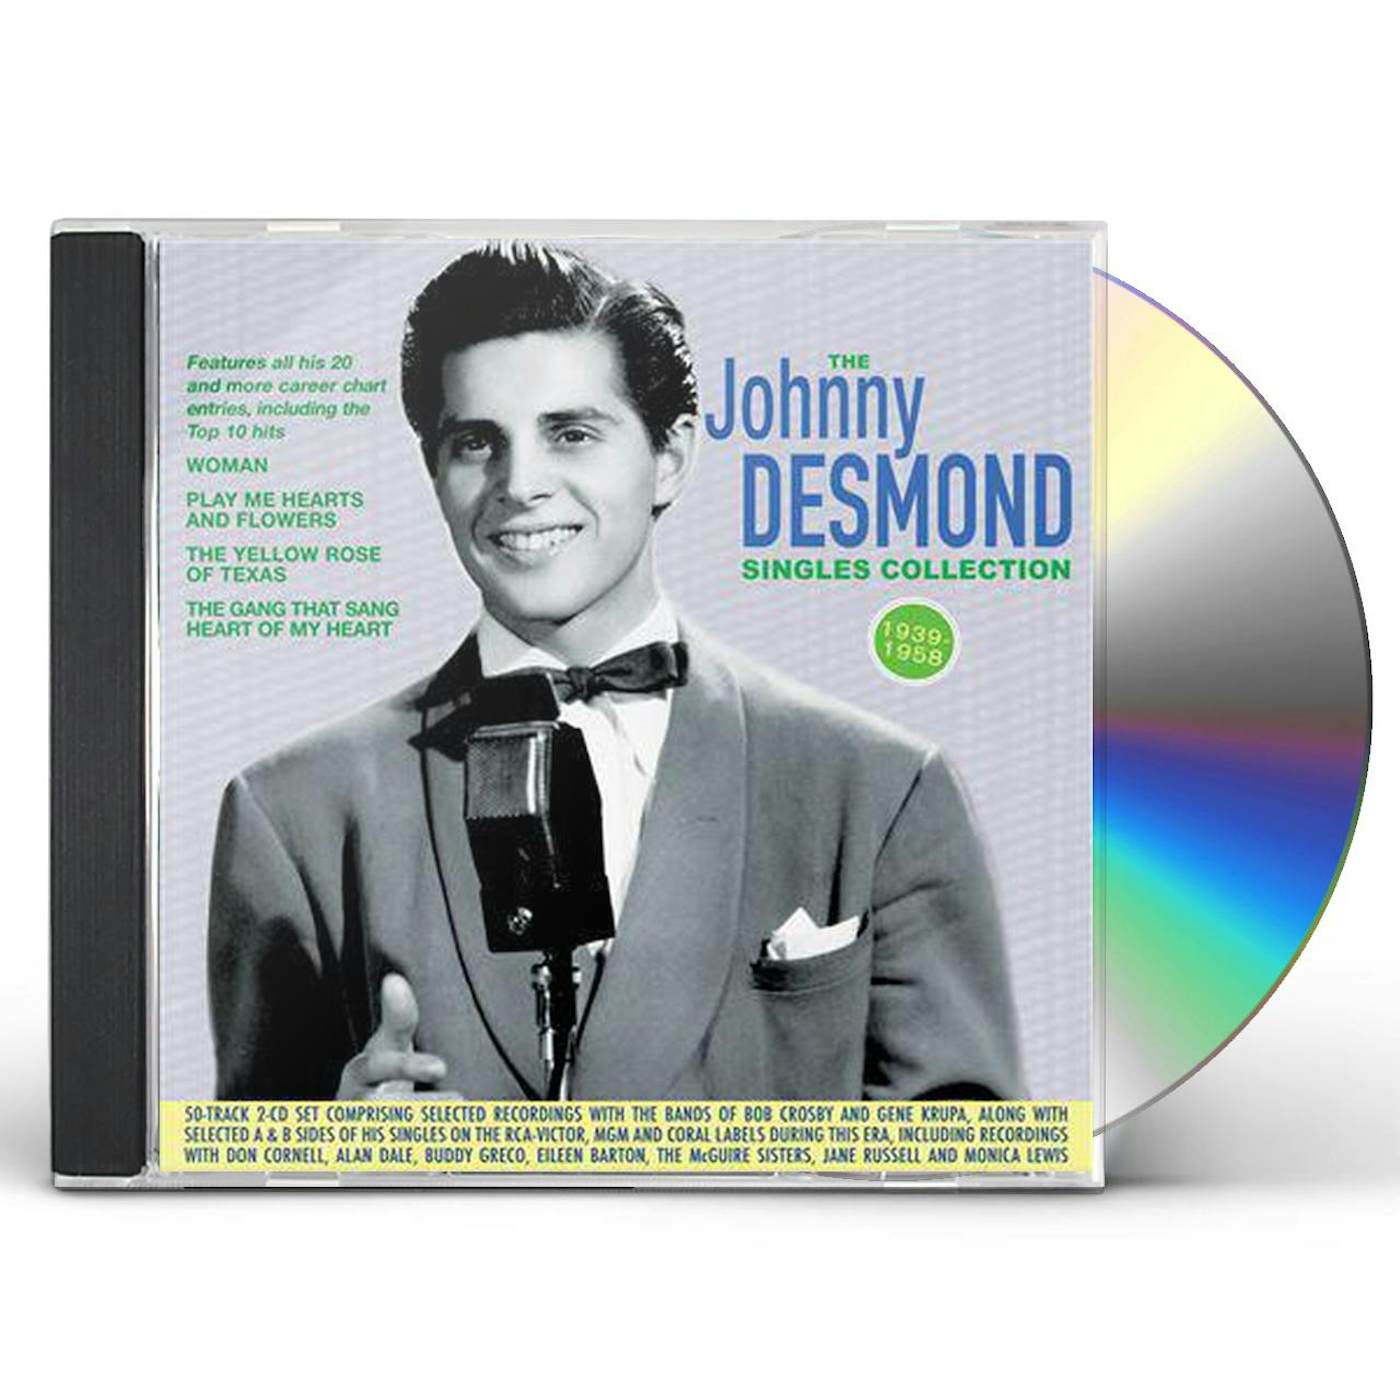 Johnny Desmond SINGLES COLLECTION 1939-58 CD